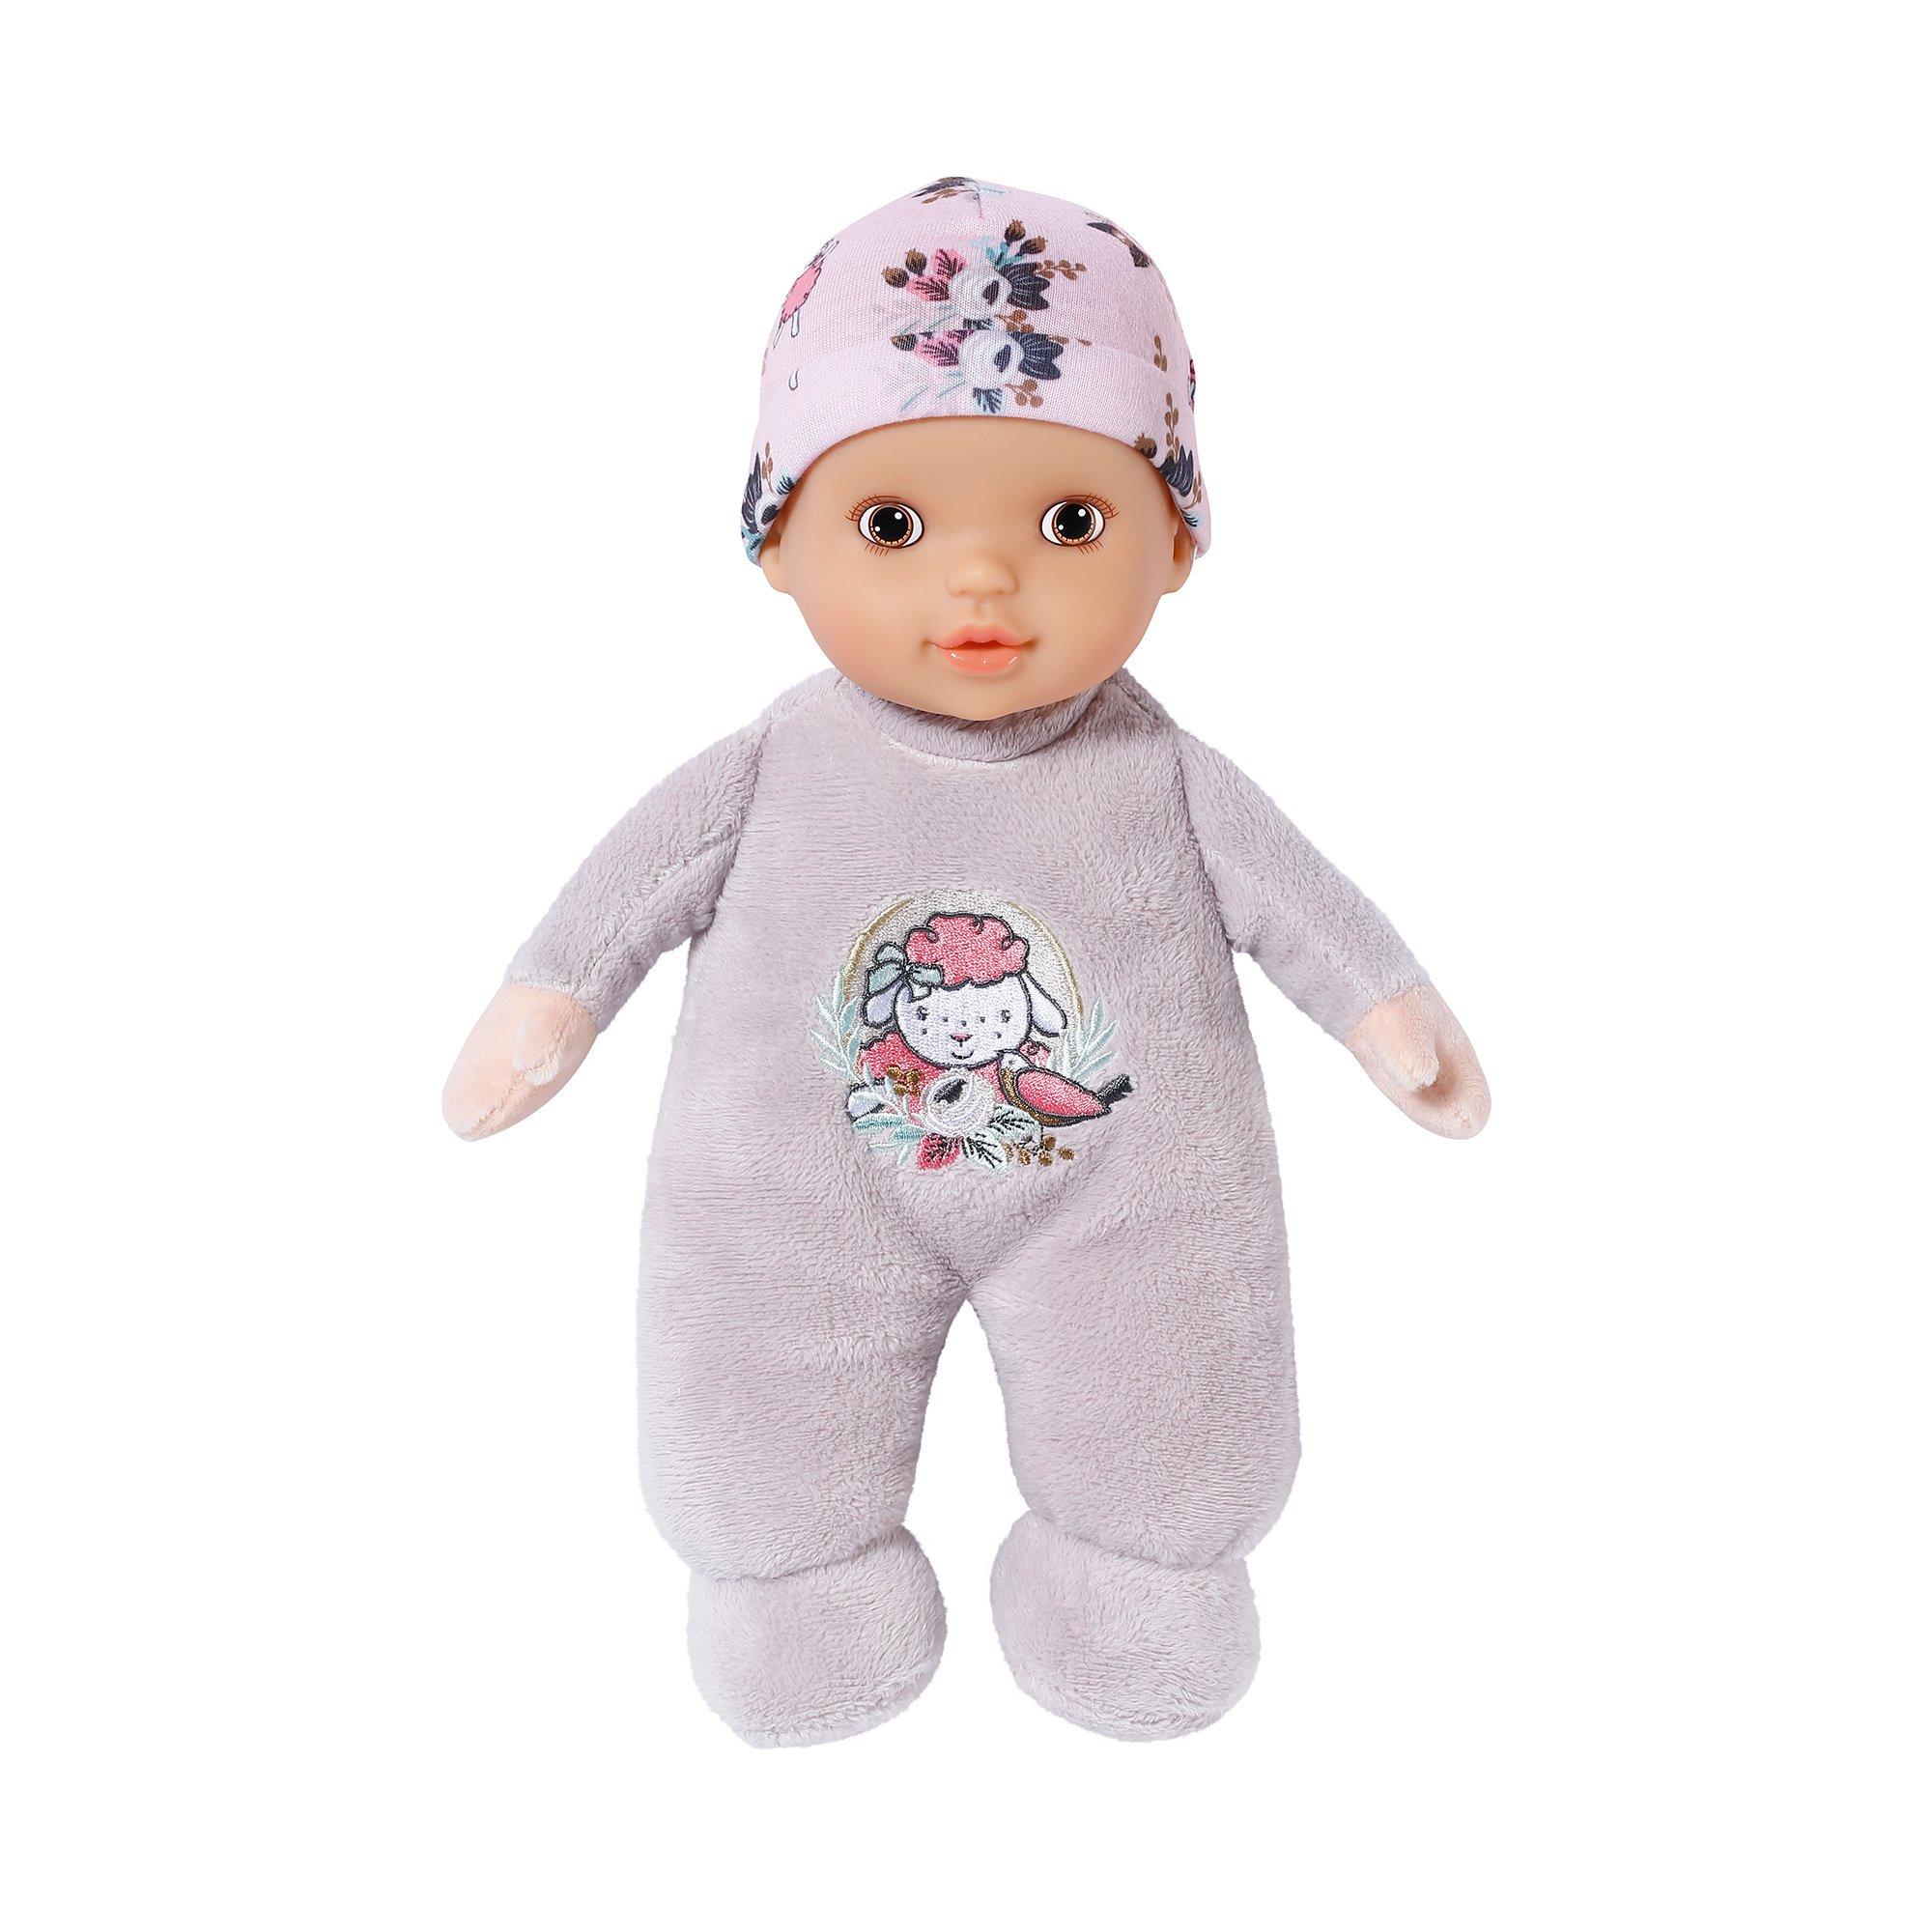 Zapf creation  Baby Annabell - Sleep Well for Babies 